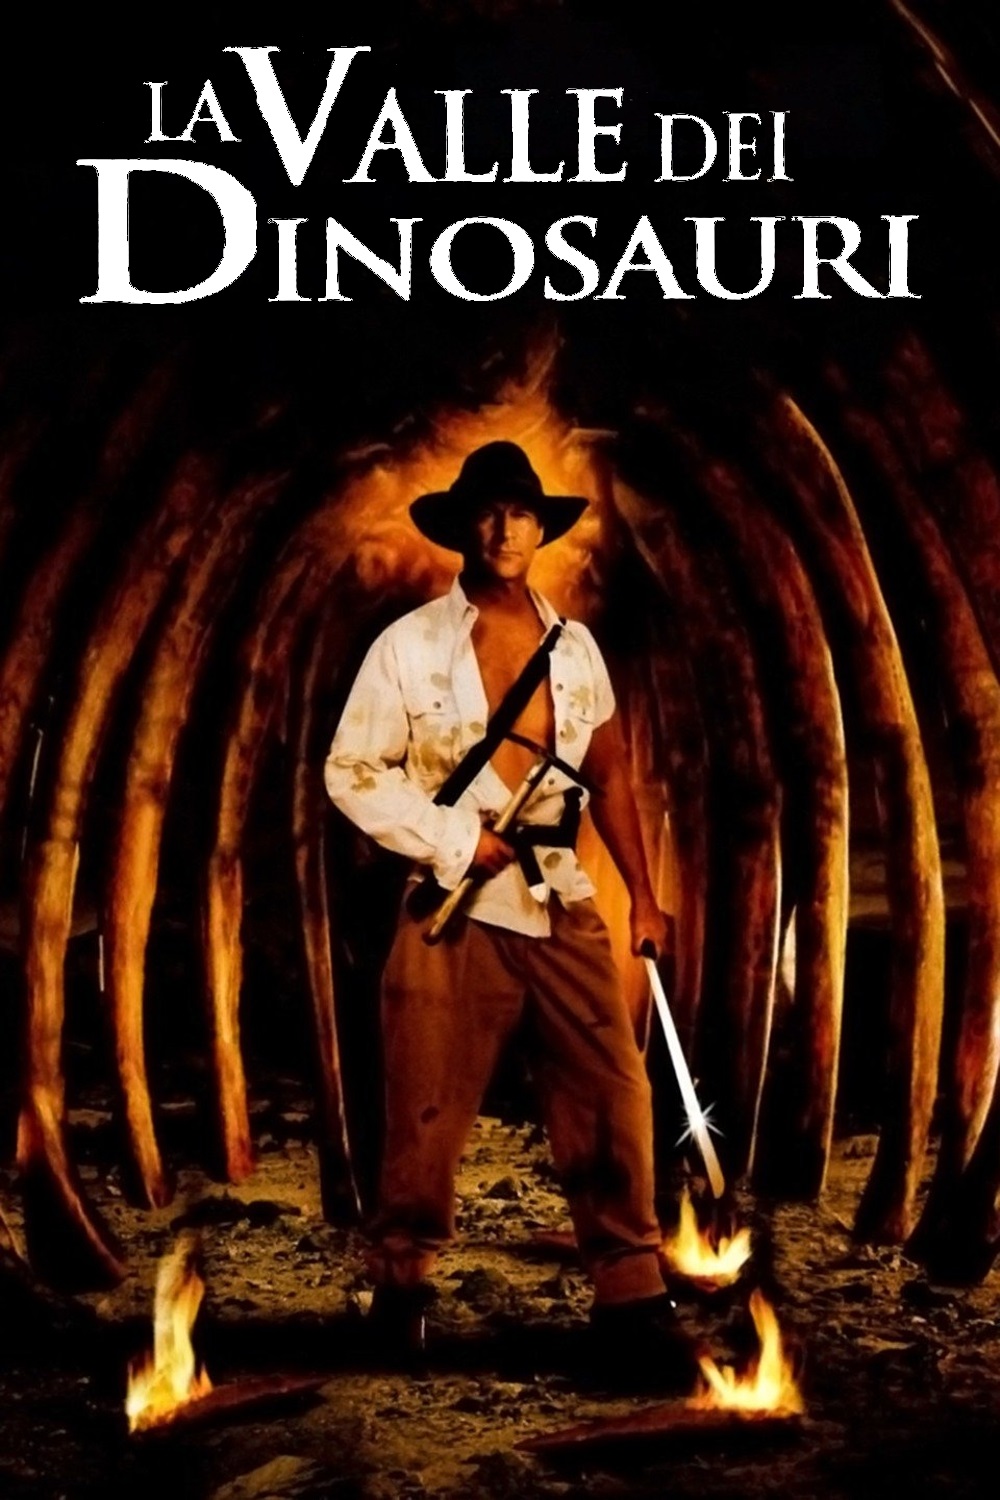 La valle dei dinosauri (2000)